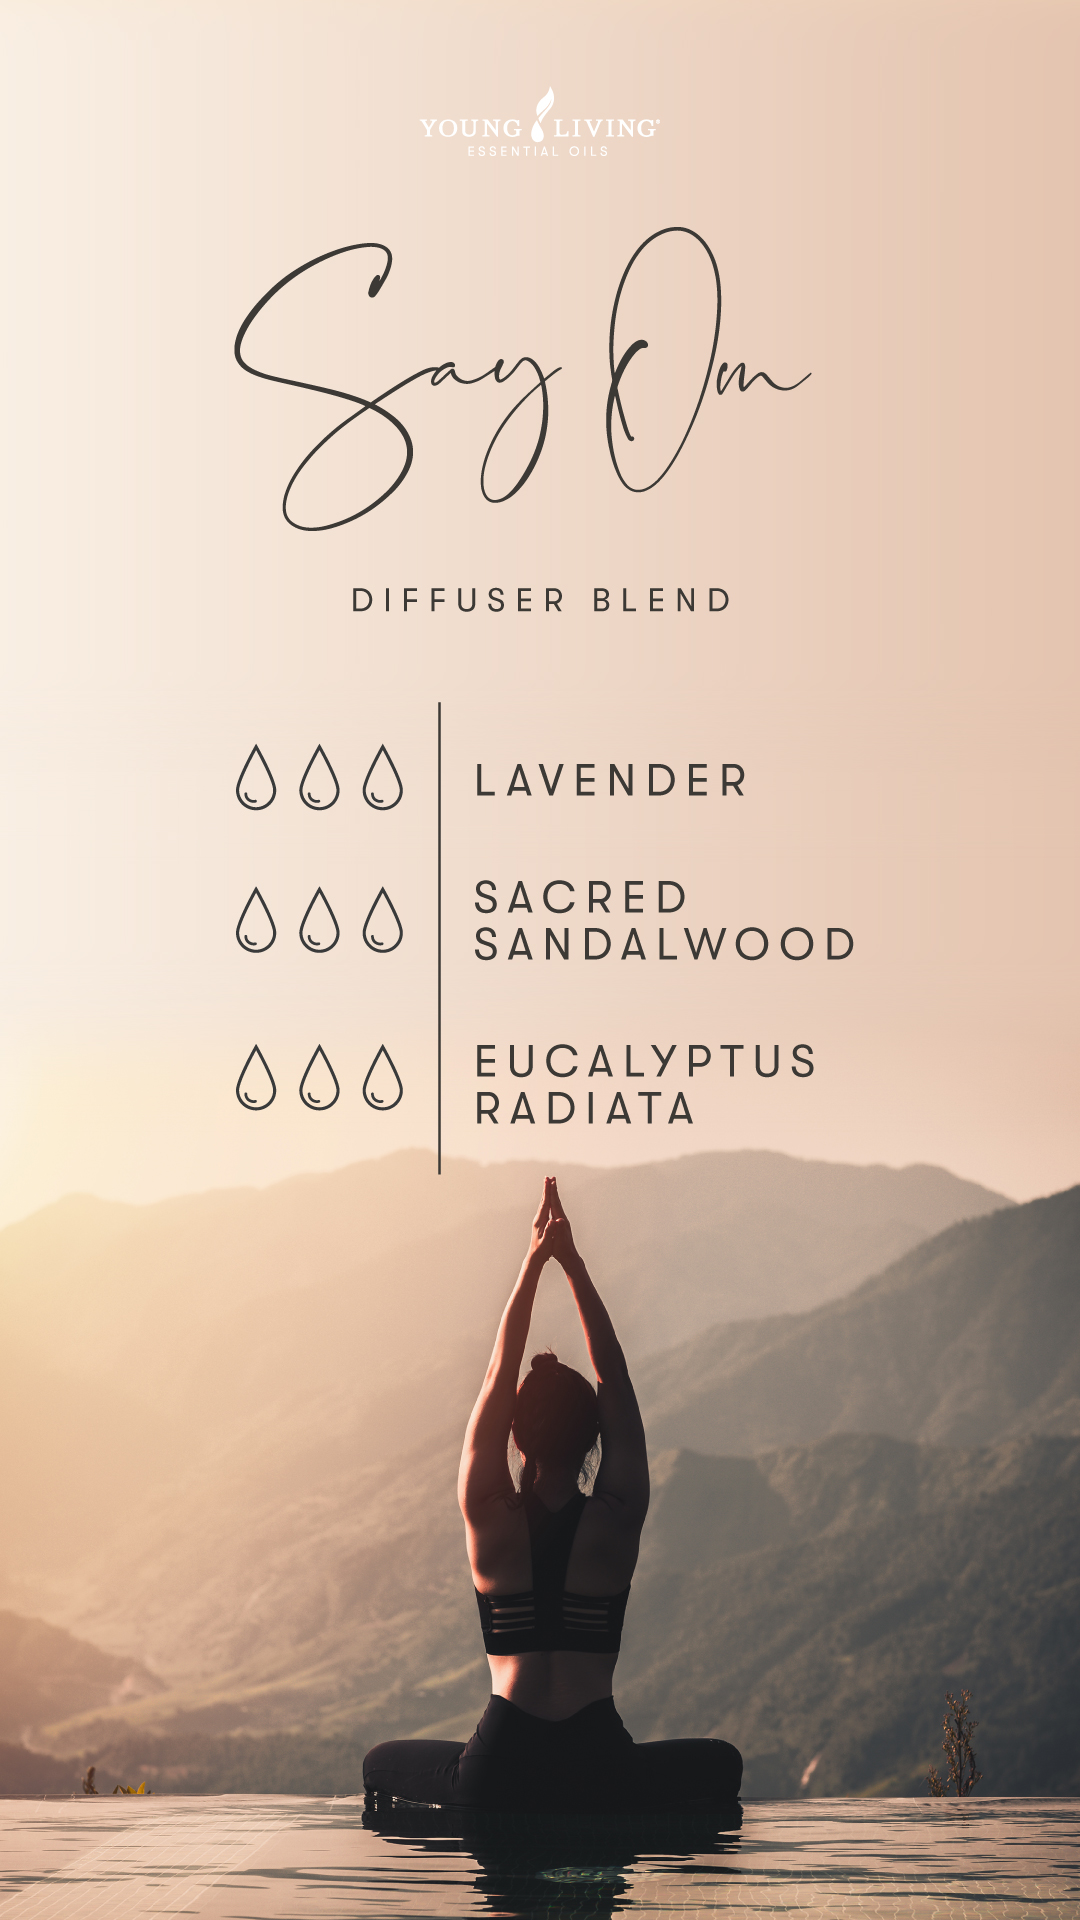 Say Om Diffuser Blend - 3 drops Lavender, 3 drops Sacred Sandalwood, 3 drops Eucalyptus Radiata 